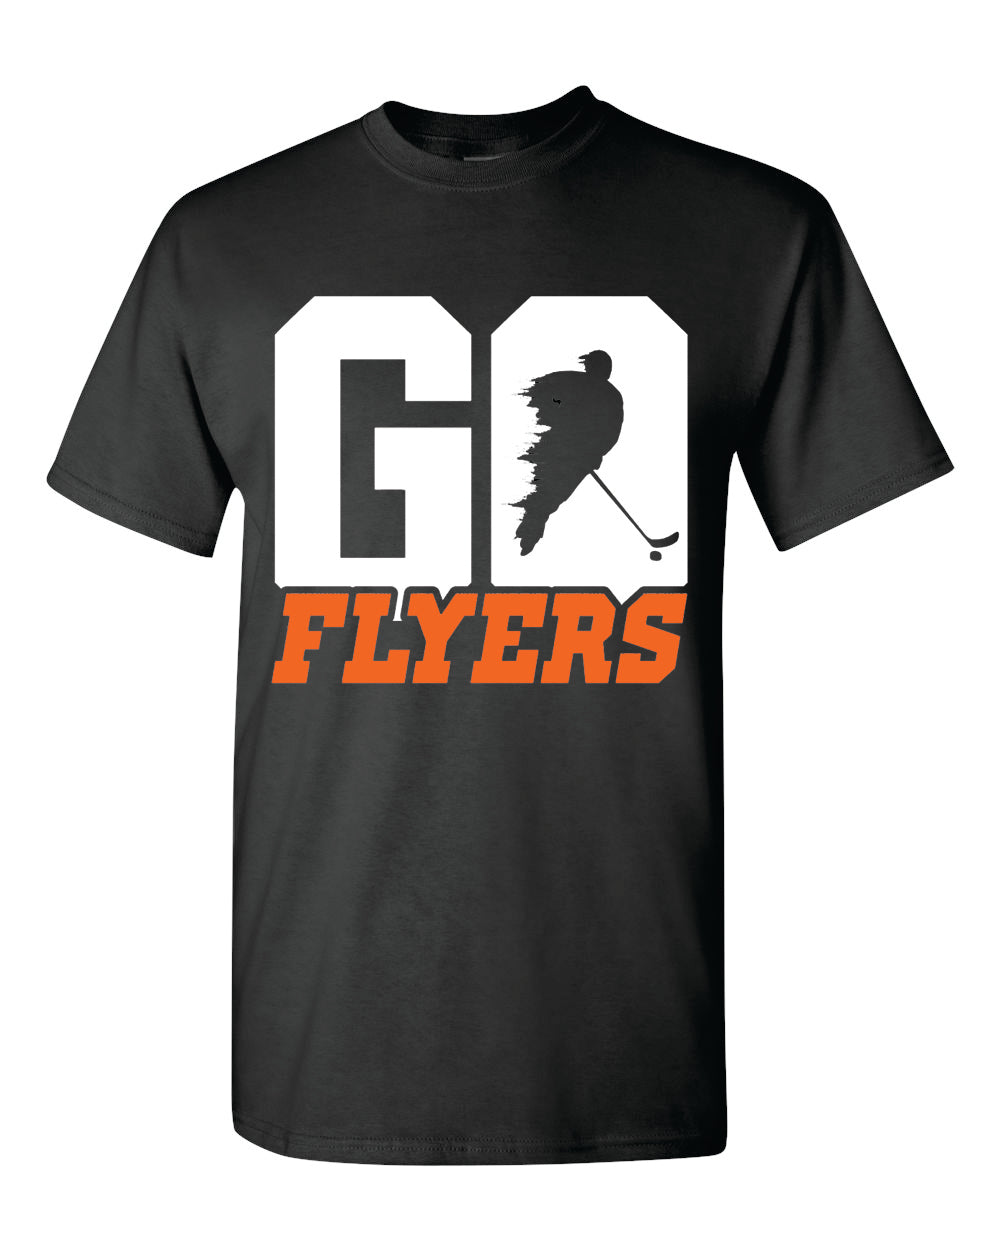 Philadelphia Flyers T-Shirts in Philadelphia Flyers Team Shop 